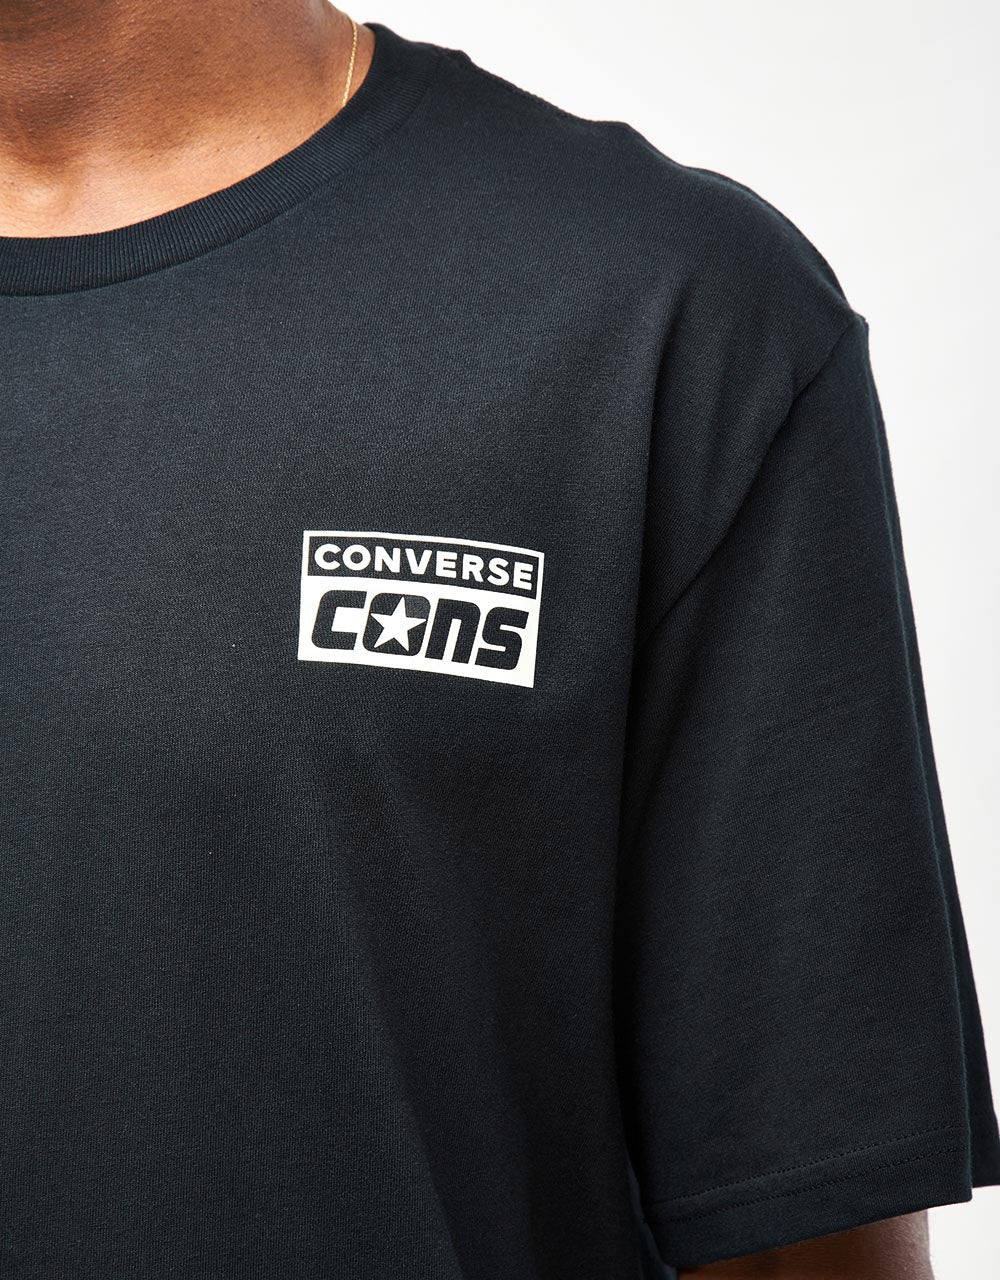 Converse Cons Graphic T-Shirt - Converse Black